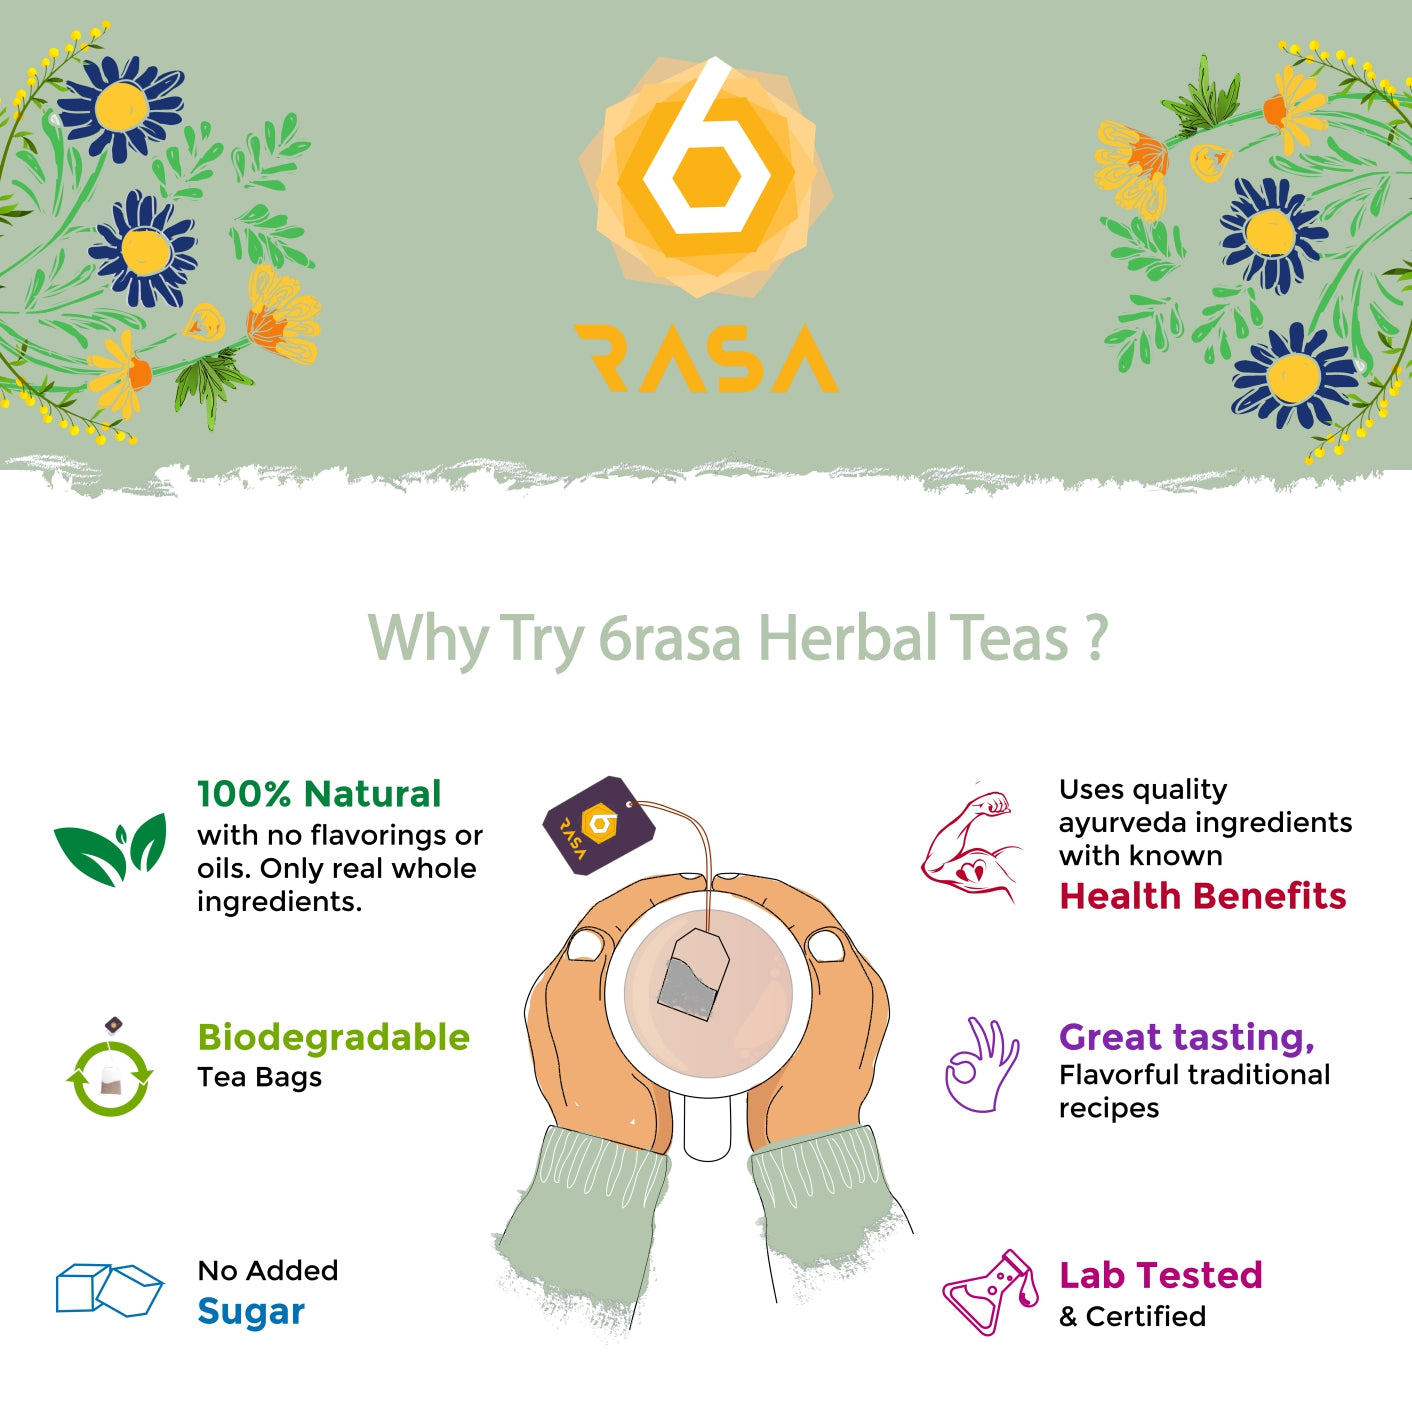 6rasa Tulsi Thrive Green Tea Bags (1.7 g Each, 25 Tea Bags)